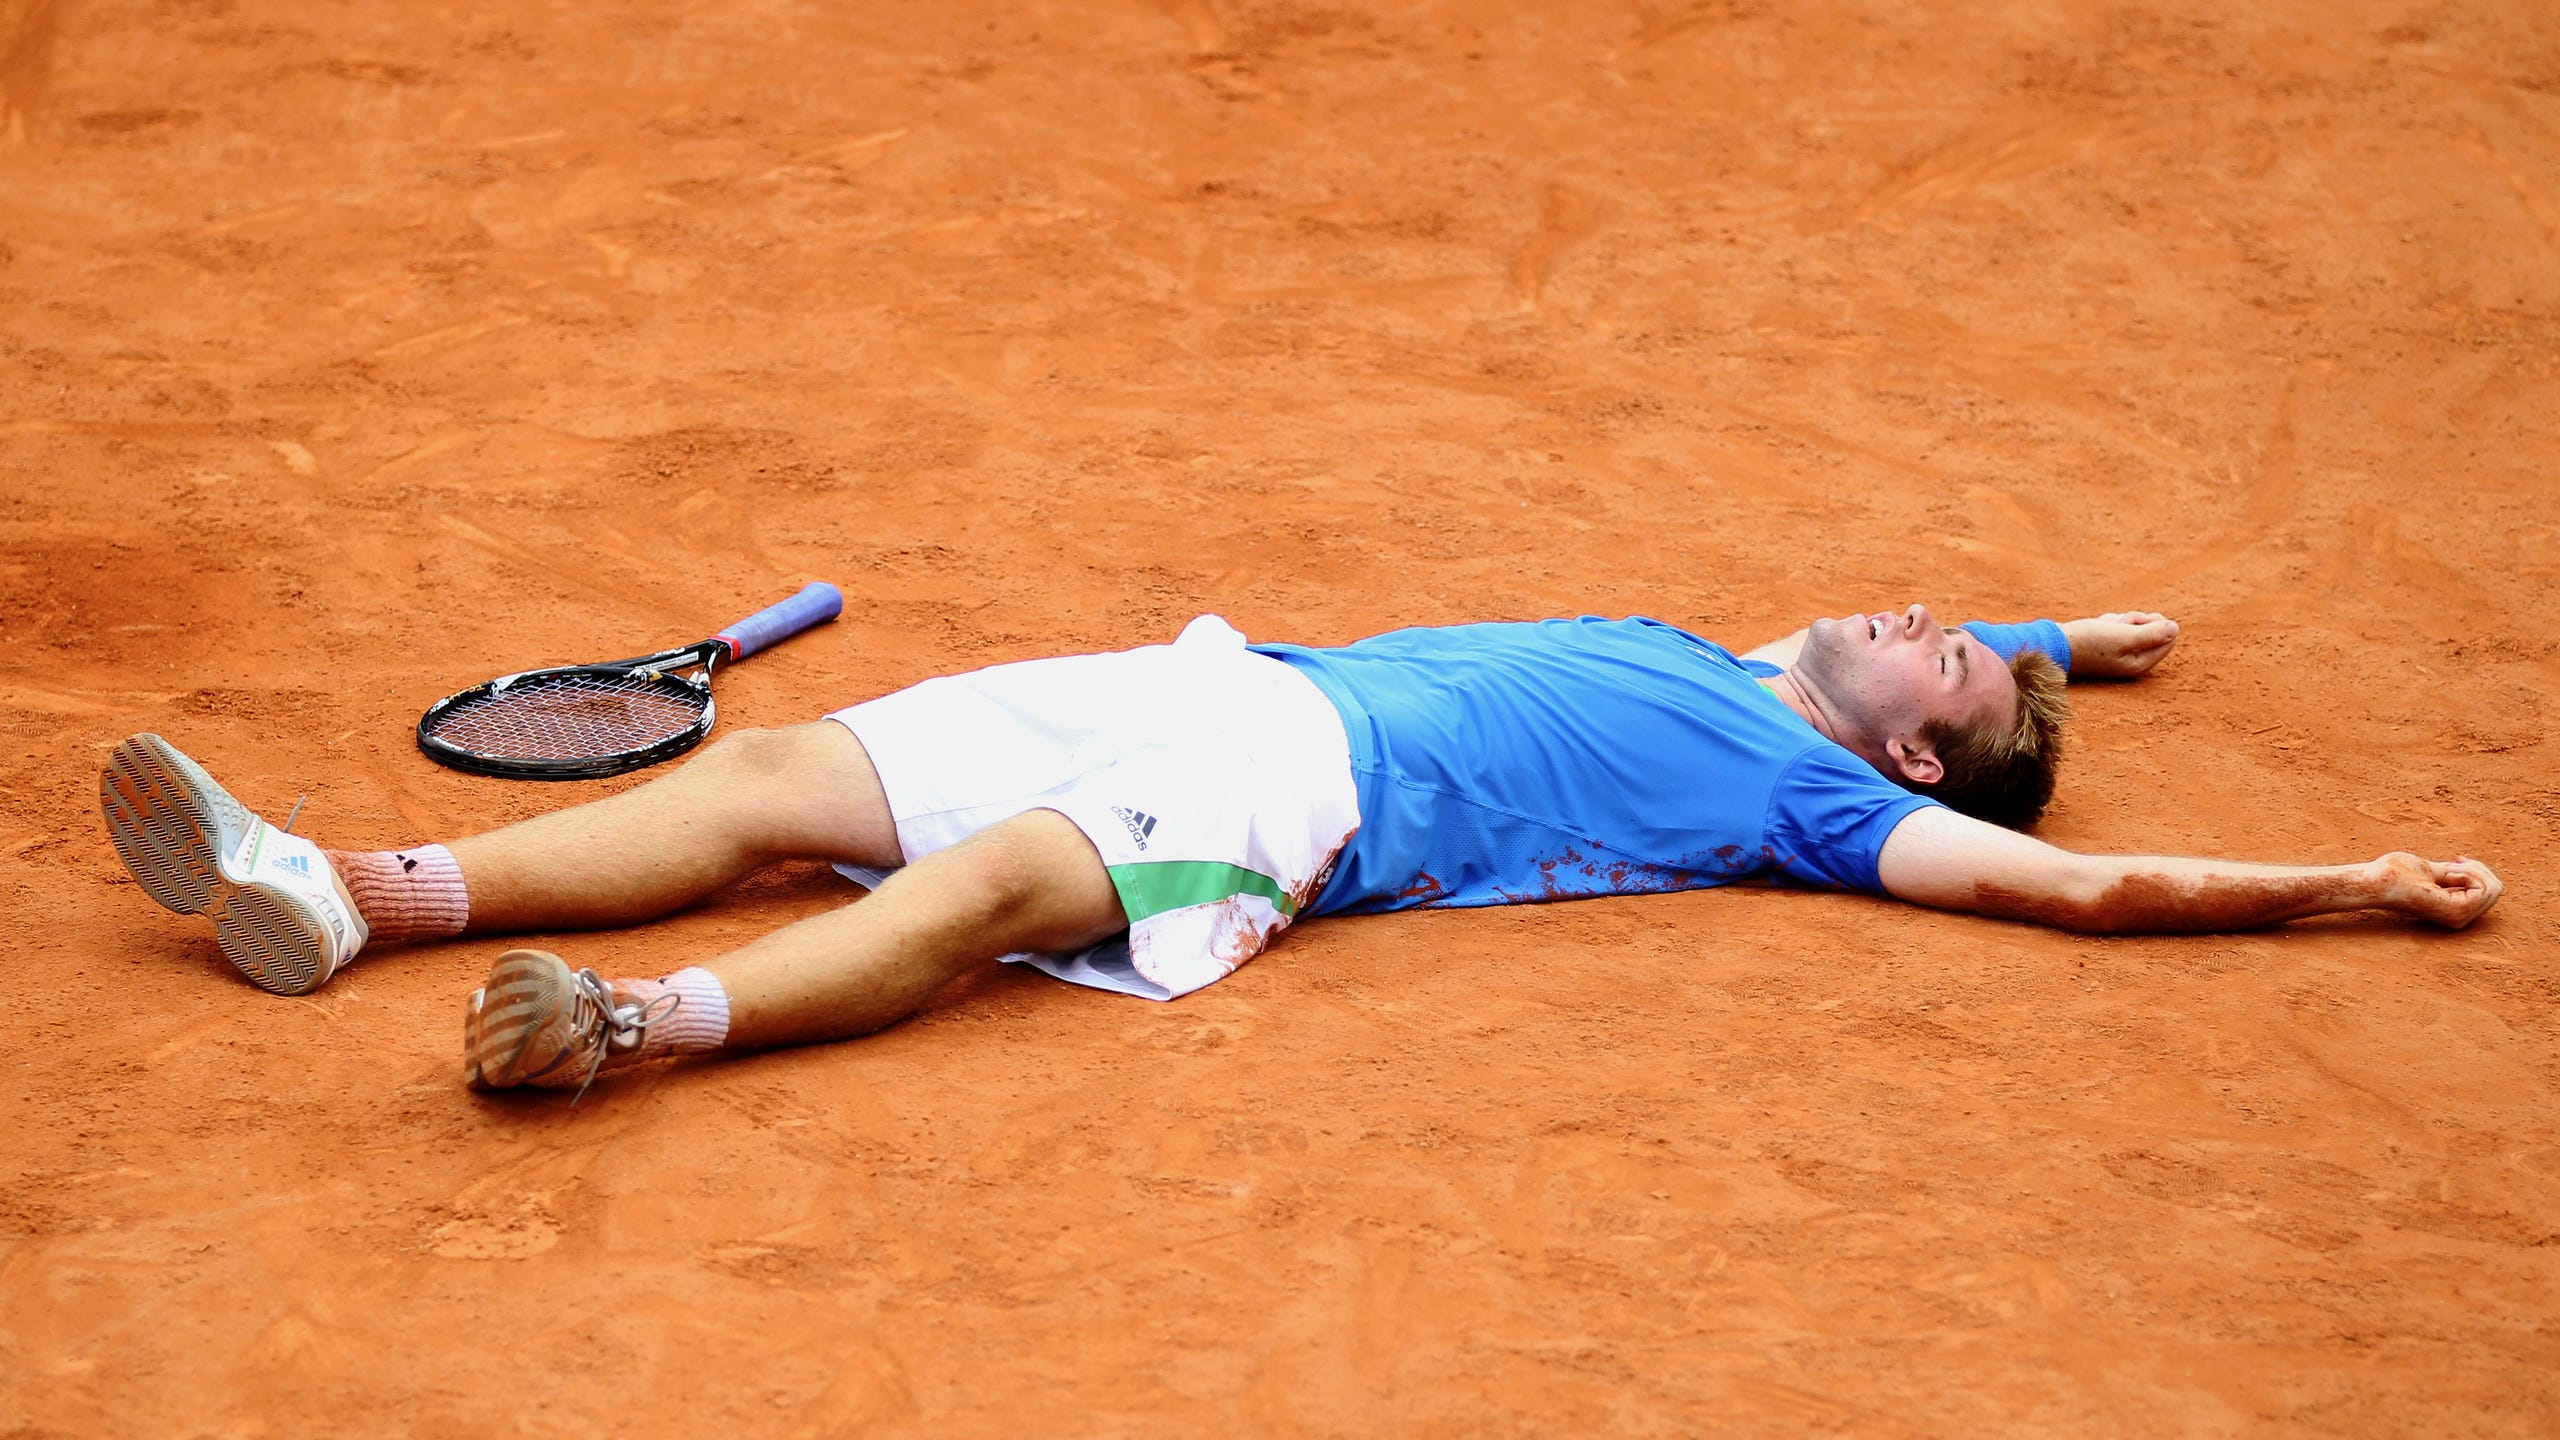 Bjorn Fratangelo on returning to Roland Garros, leading Djokovic and ...